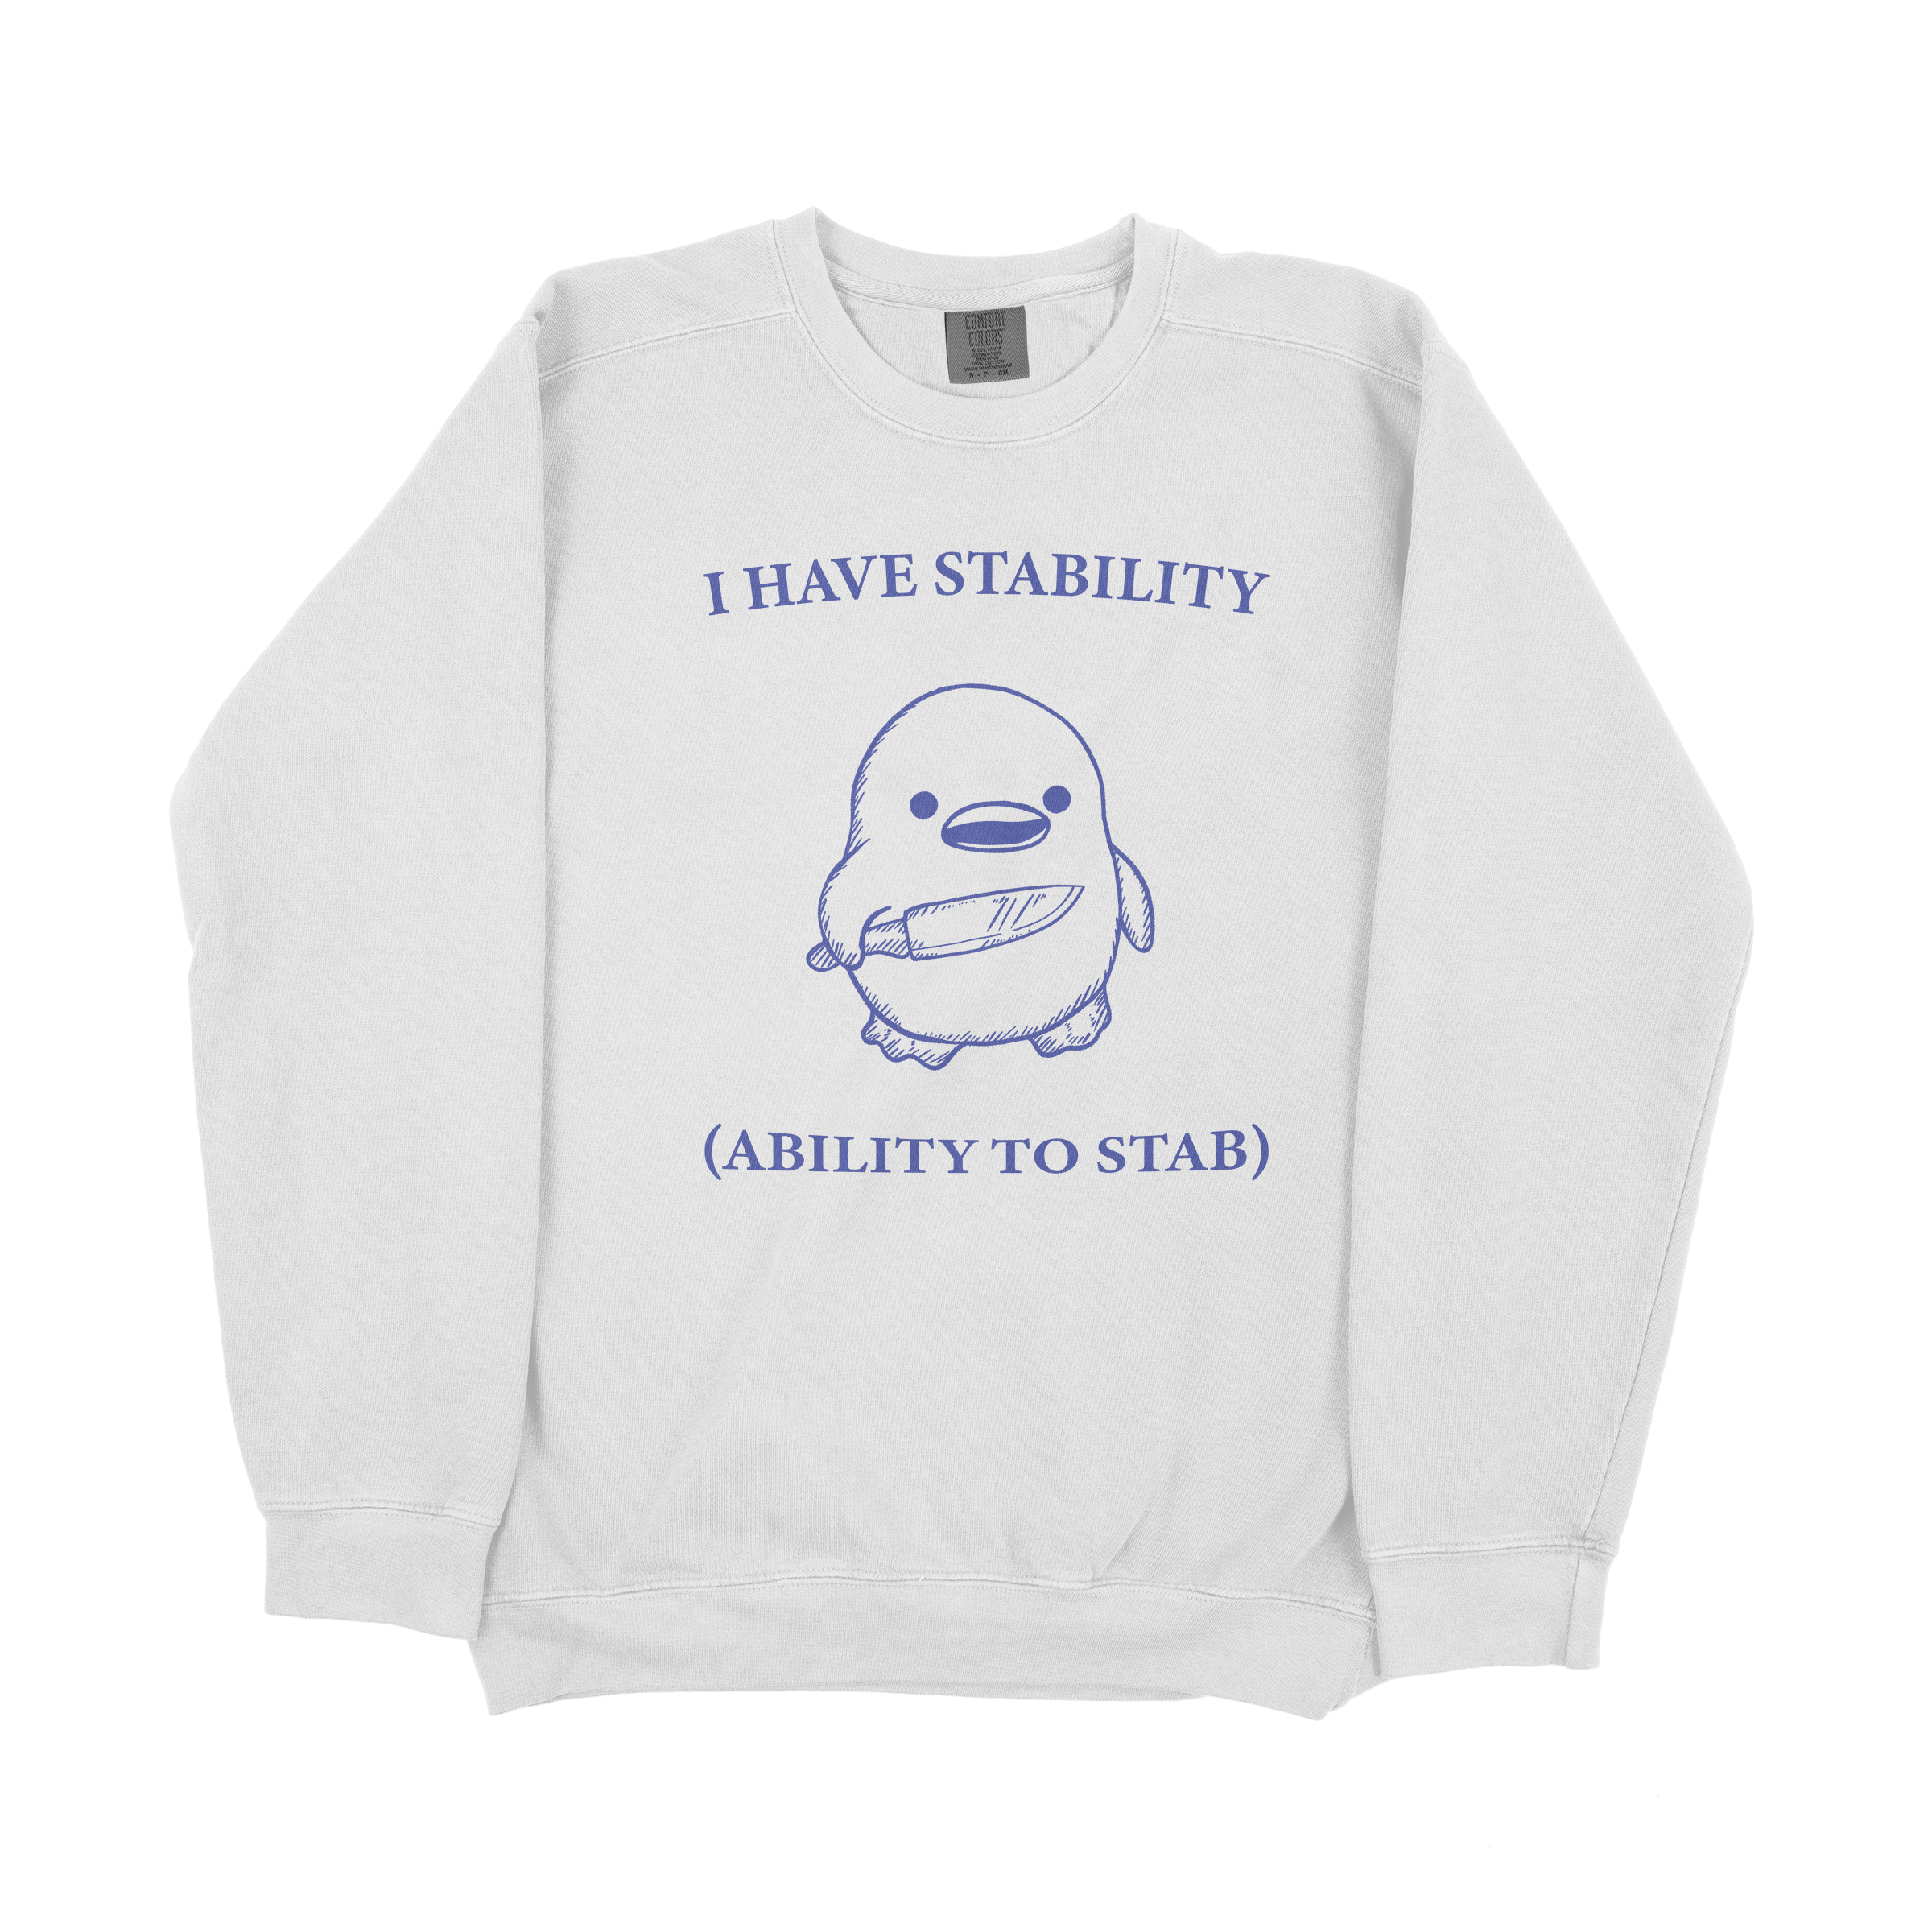 "I Have Stability" Sweatshirt